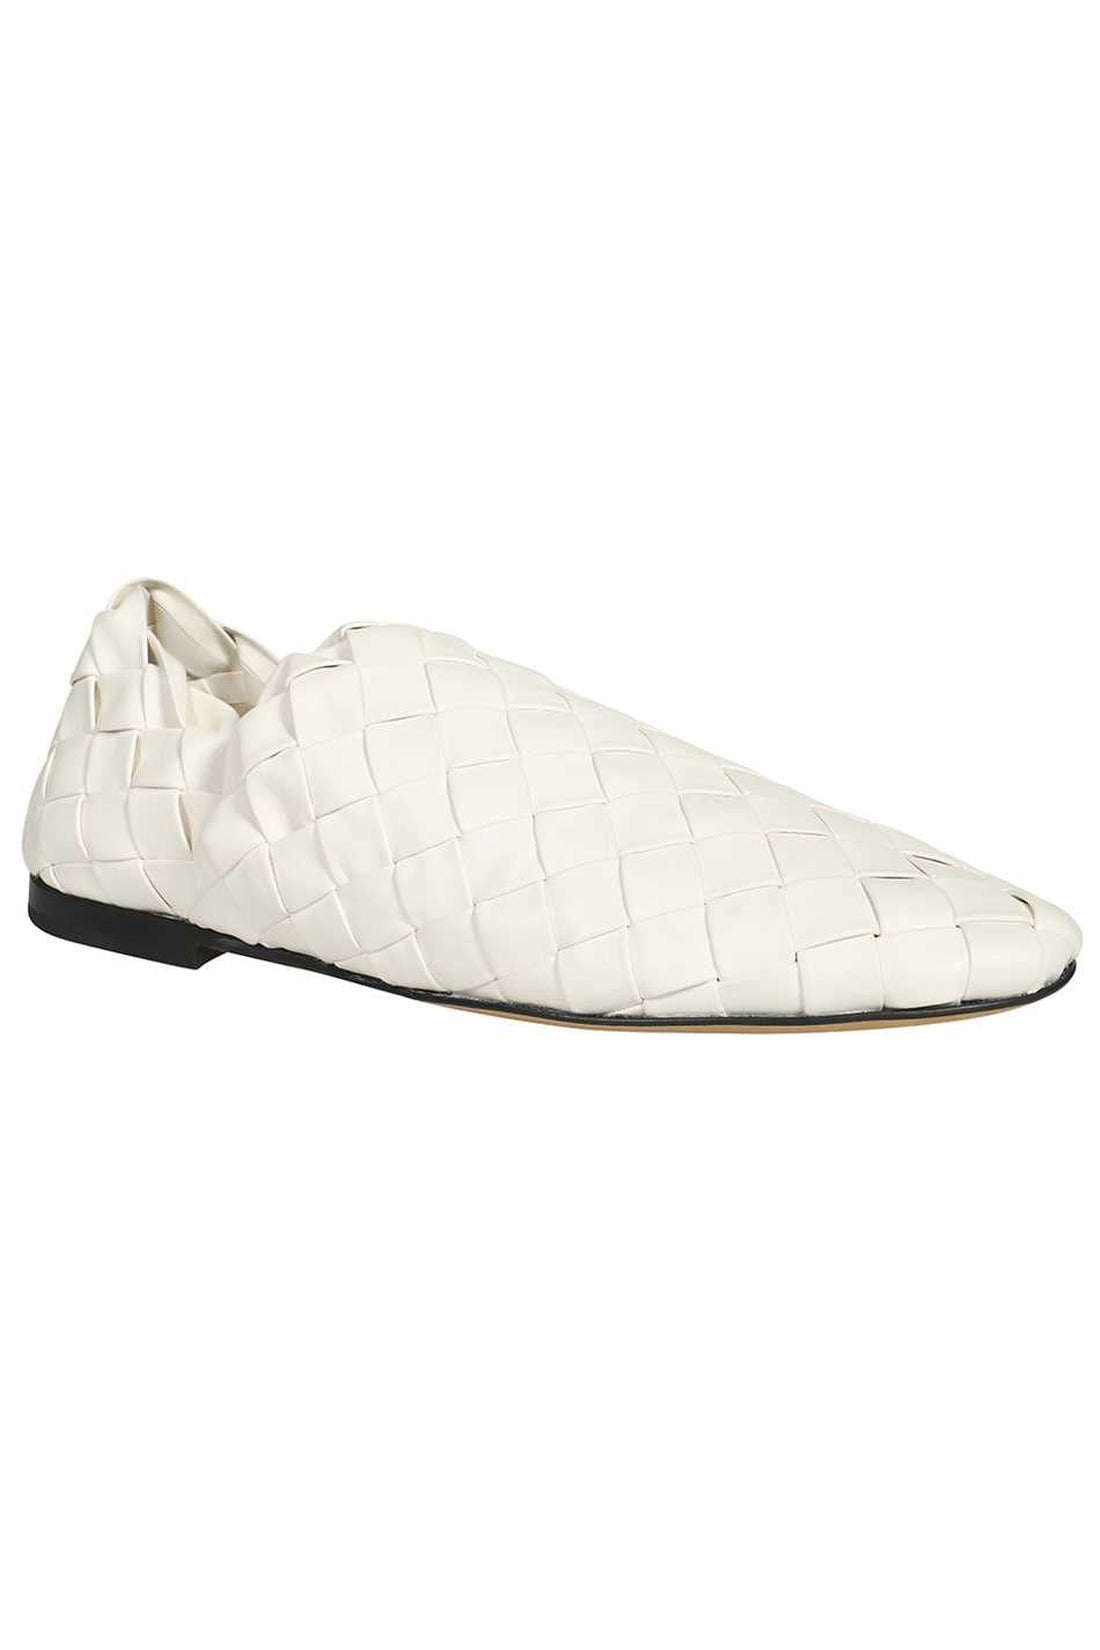 Bottega Veneta-OUTLET-SALE-Leather slippers-ARCHIVIST